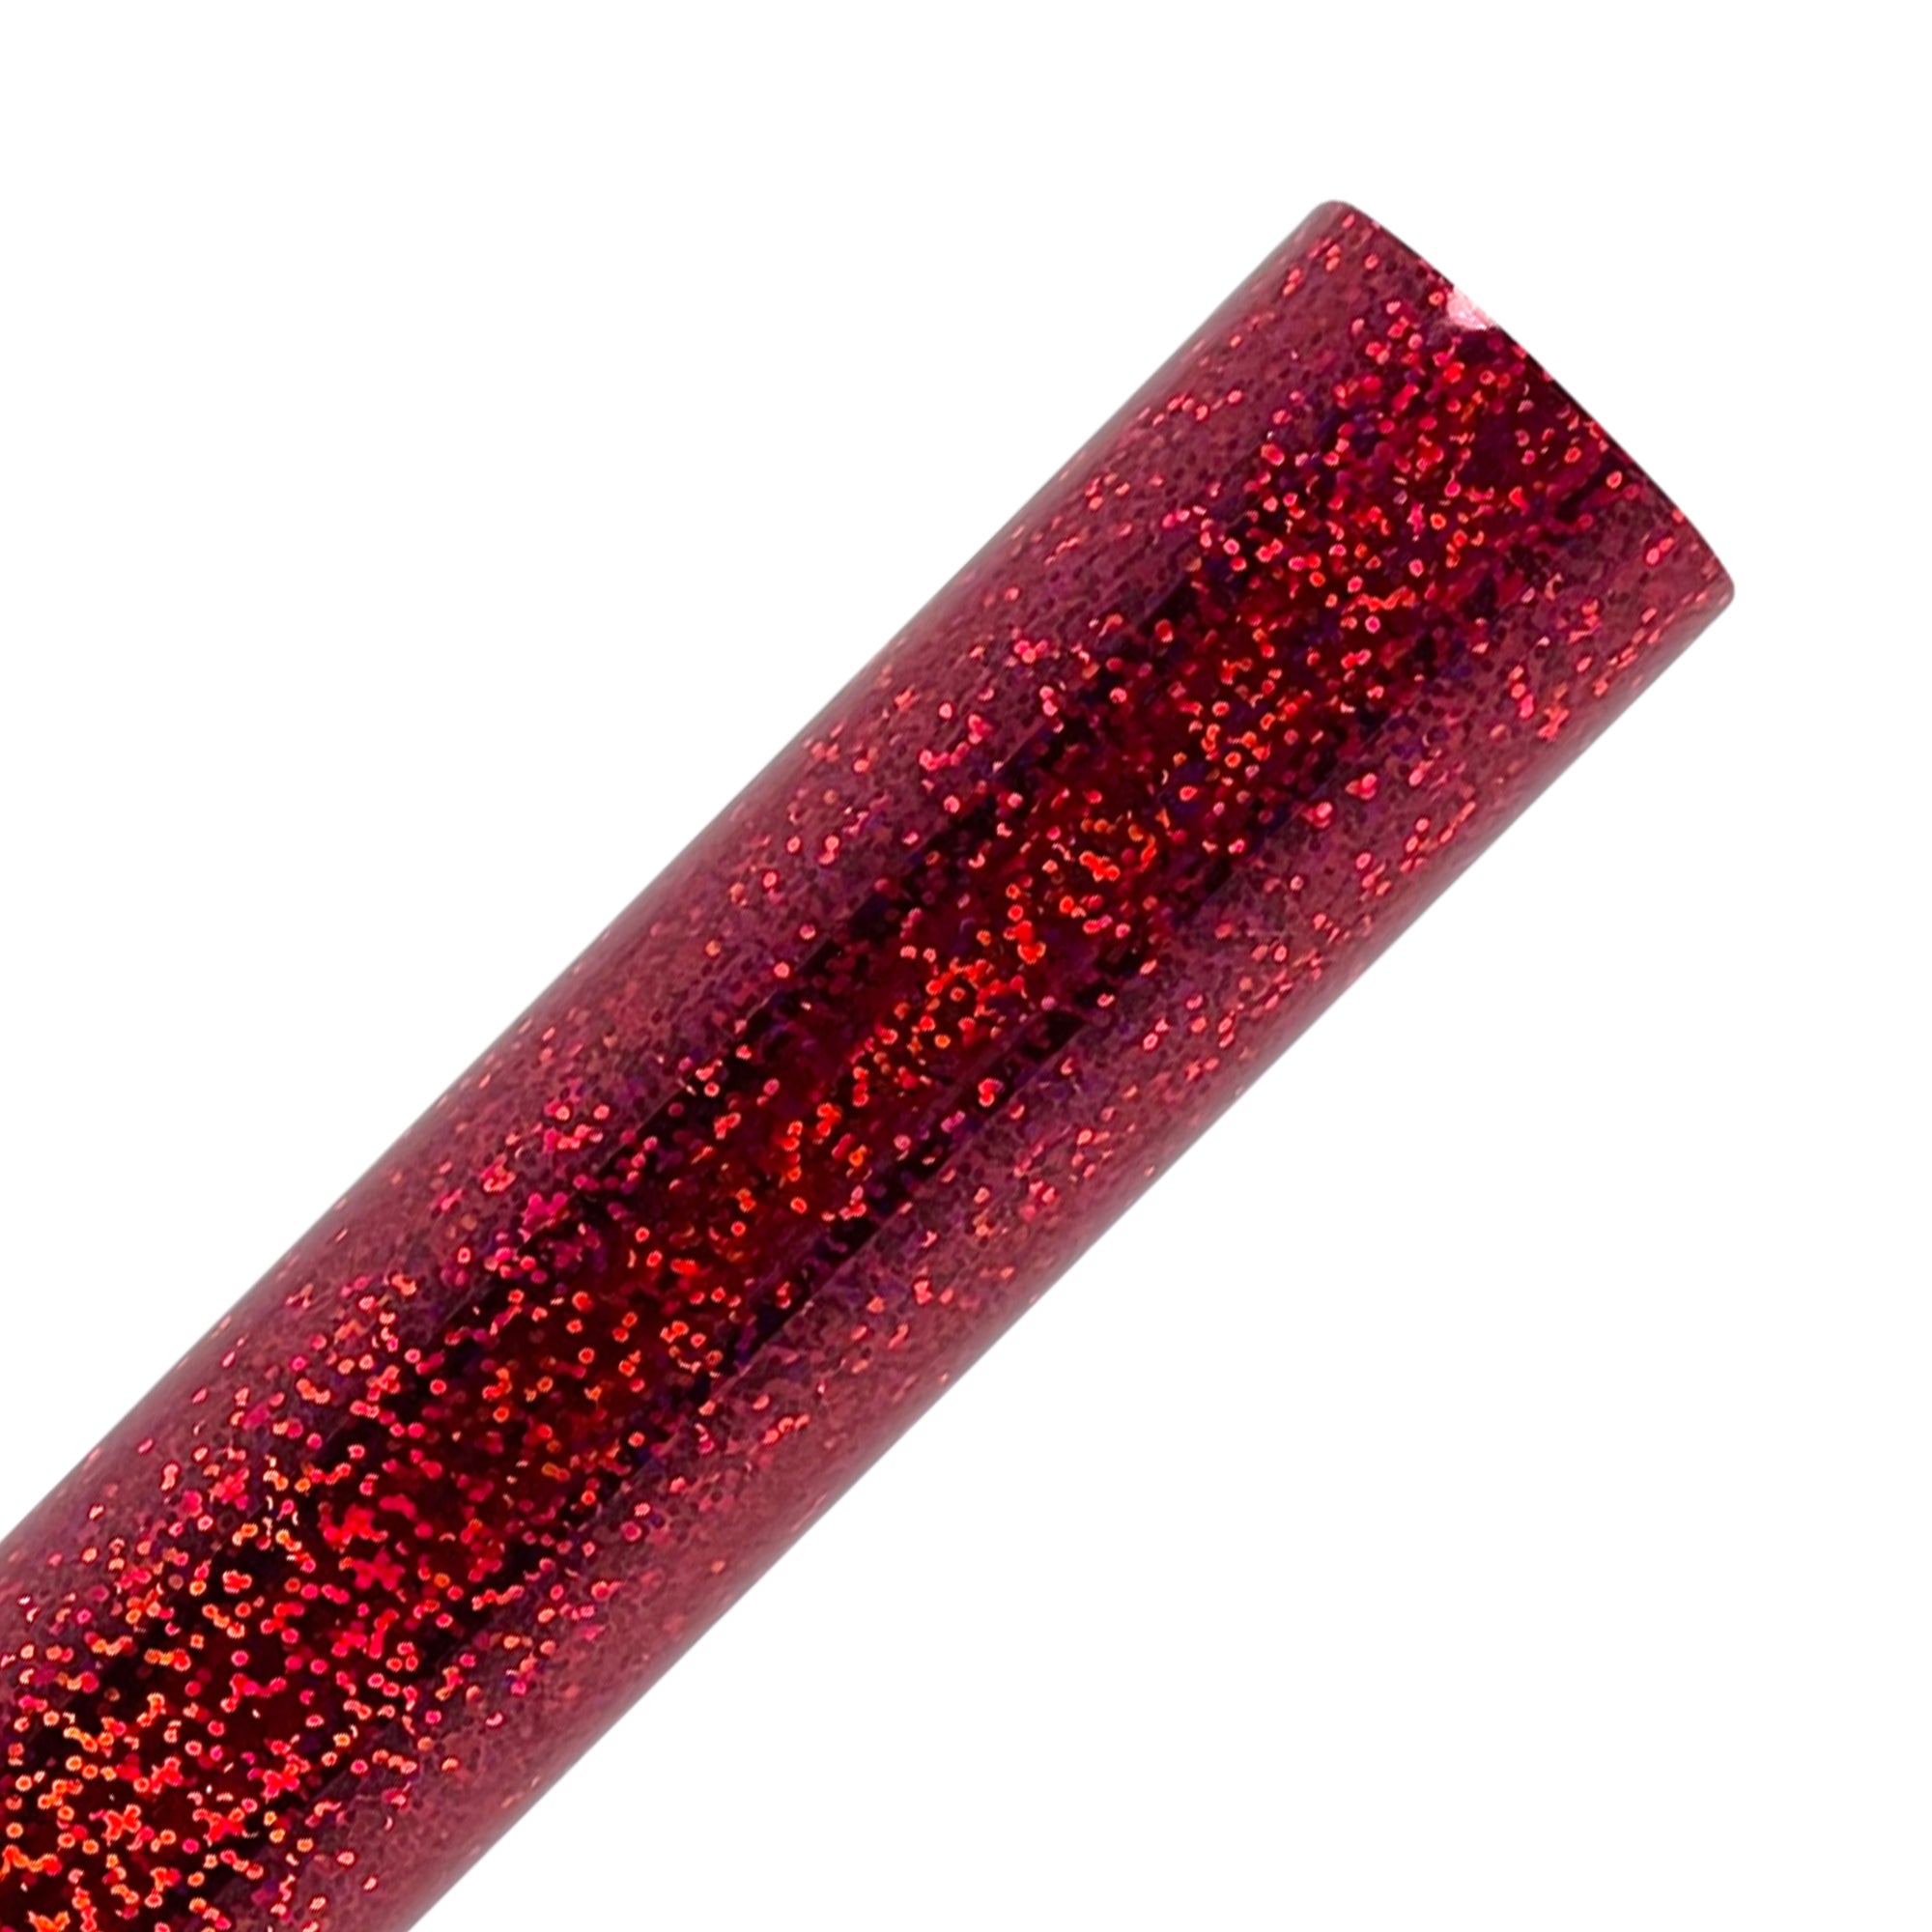 Red Puff Heat Transfer Vinyl Rolls By Craftables – shopcraftables